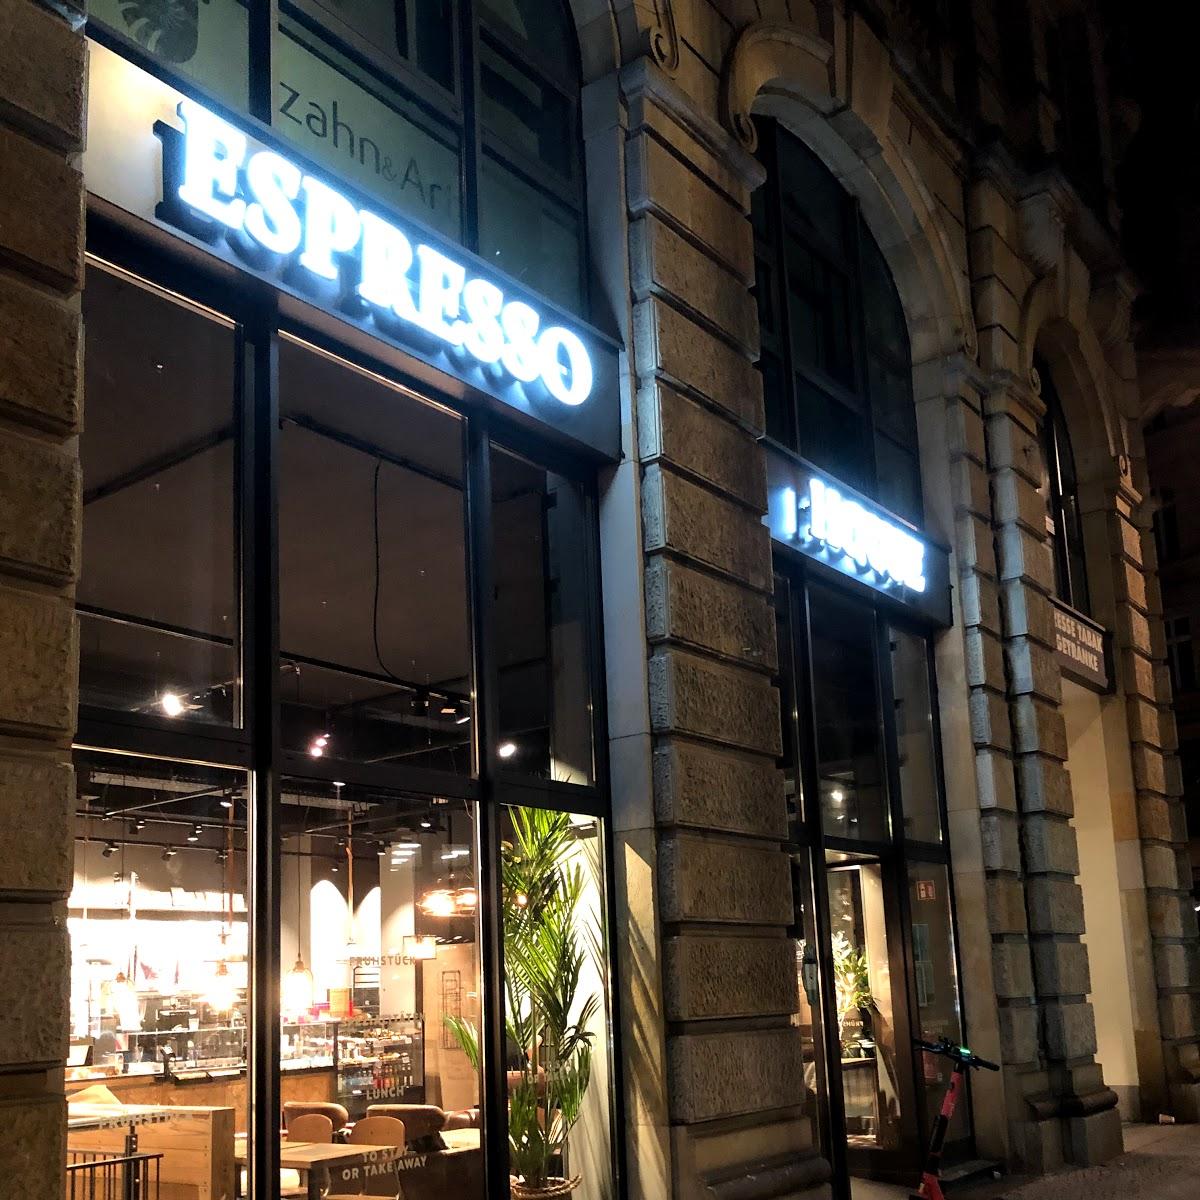 Restaurant "Espresso House" in Berlin